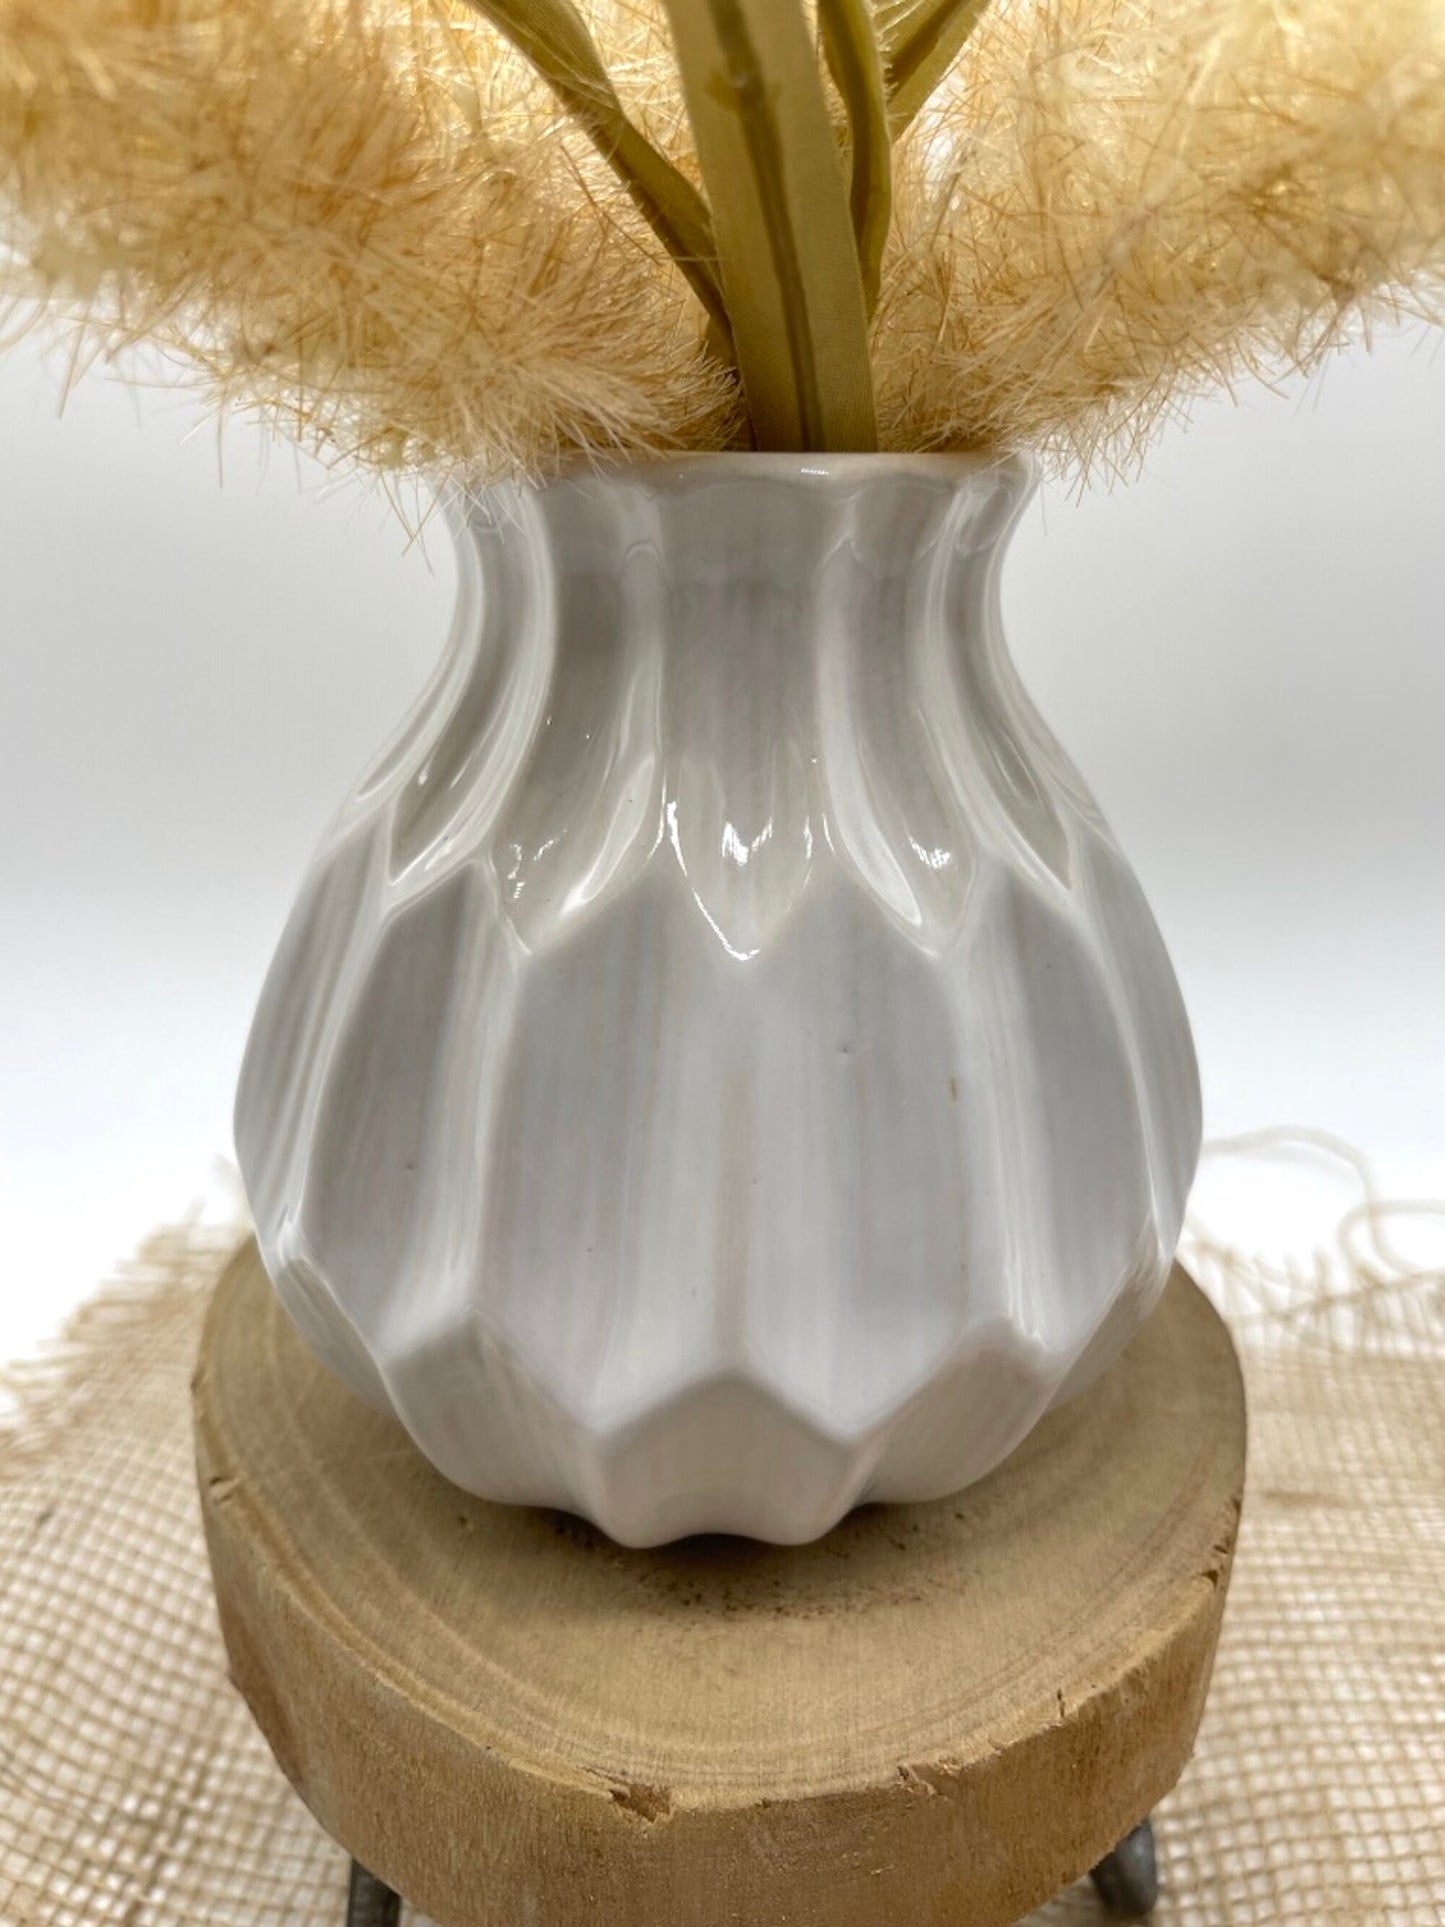 Wheat Arrangement in White Ceramic Vase, Nature Accent Home Decor, Farmhouse Harvest Decoration